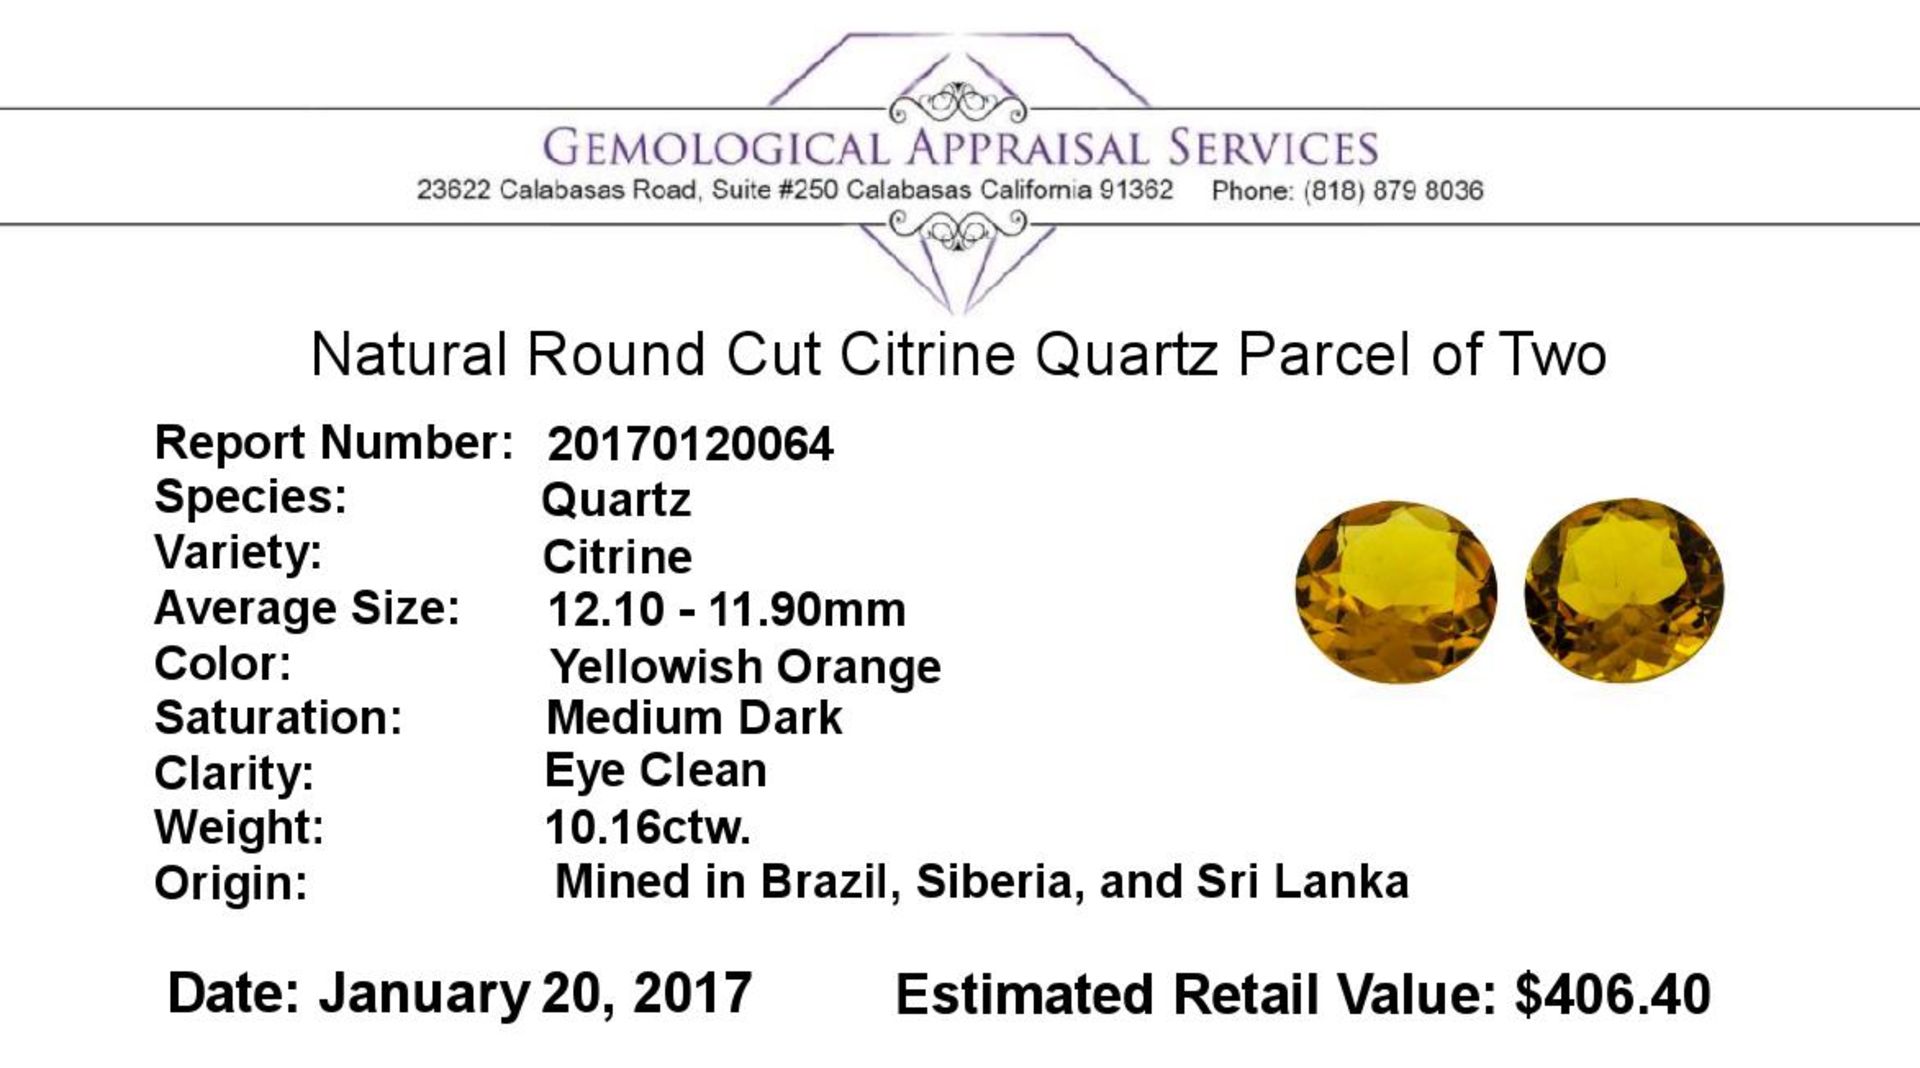 10.16 ctw.Natural Round Cut Citrine Quartz Parcel of Two - Image 3 of 3